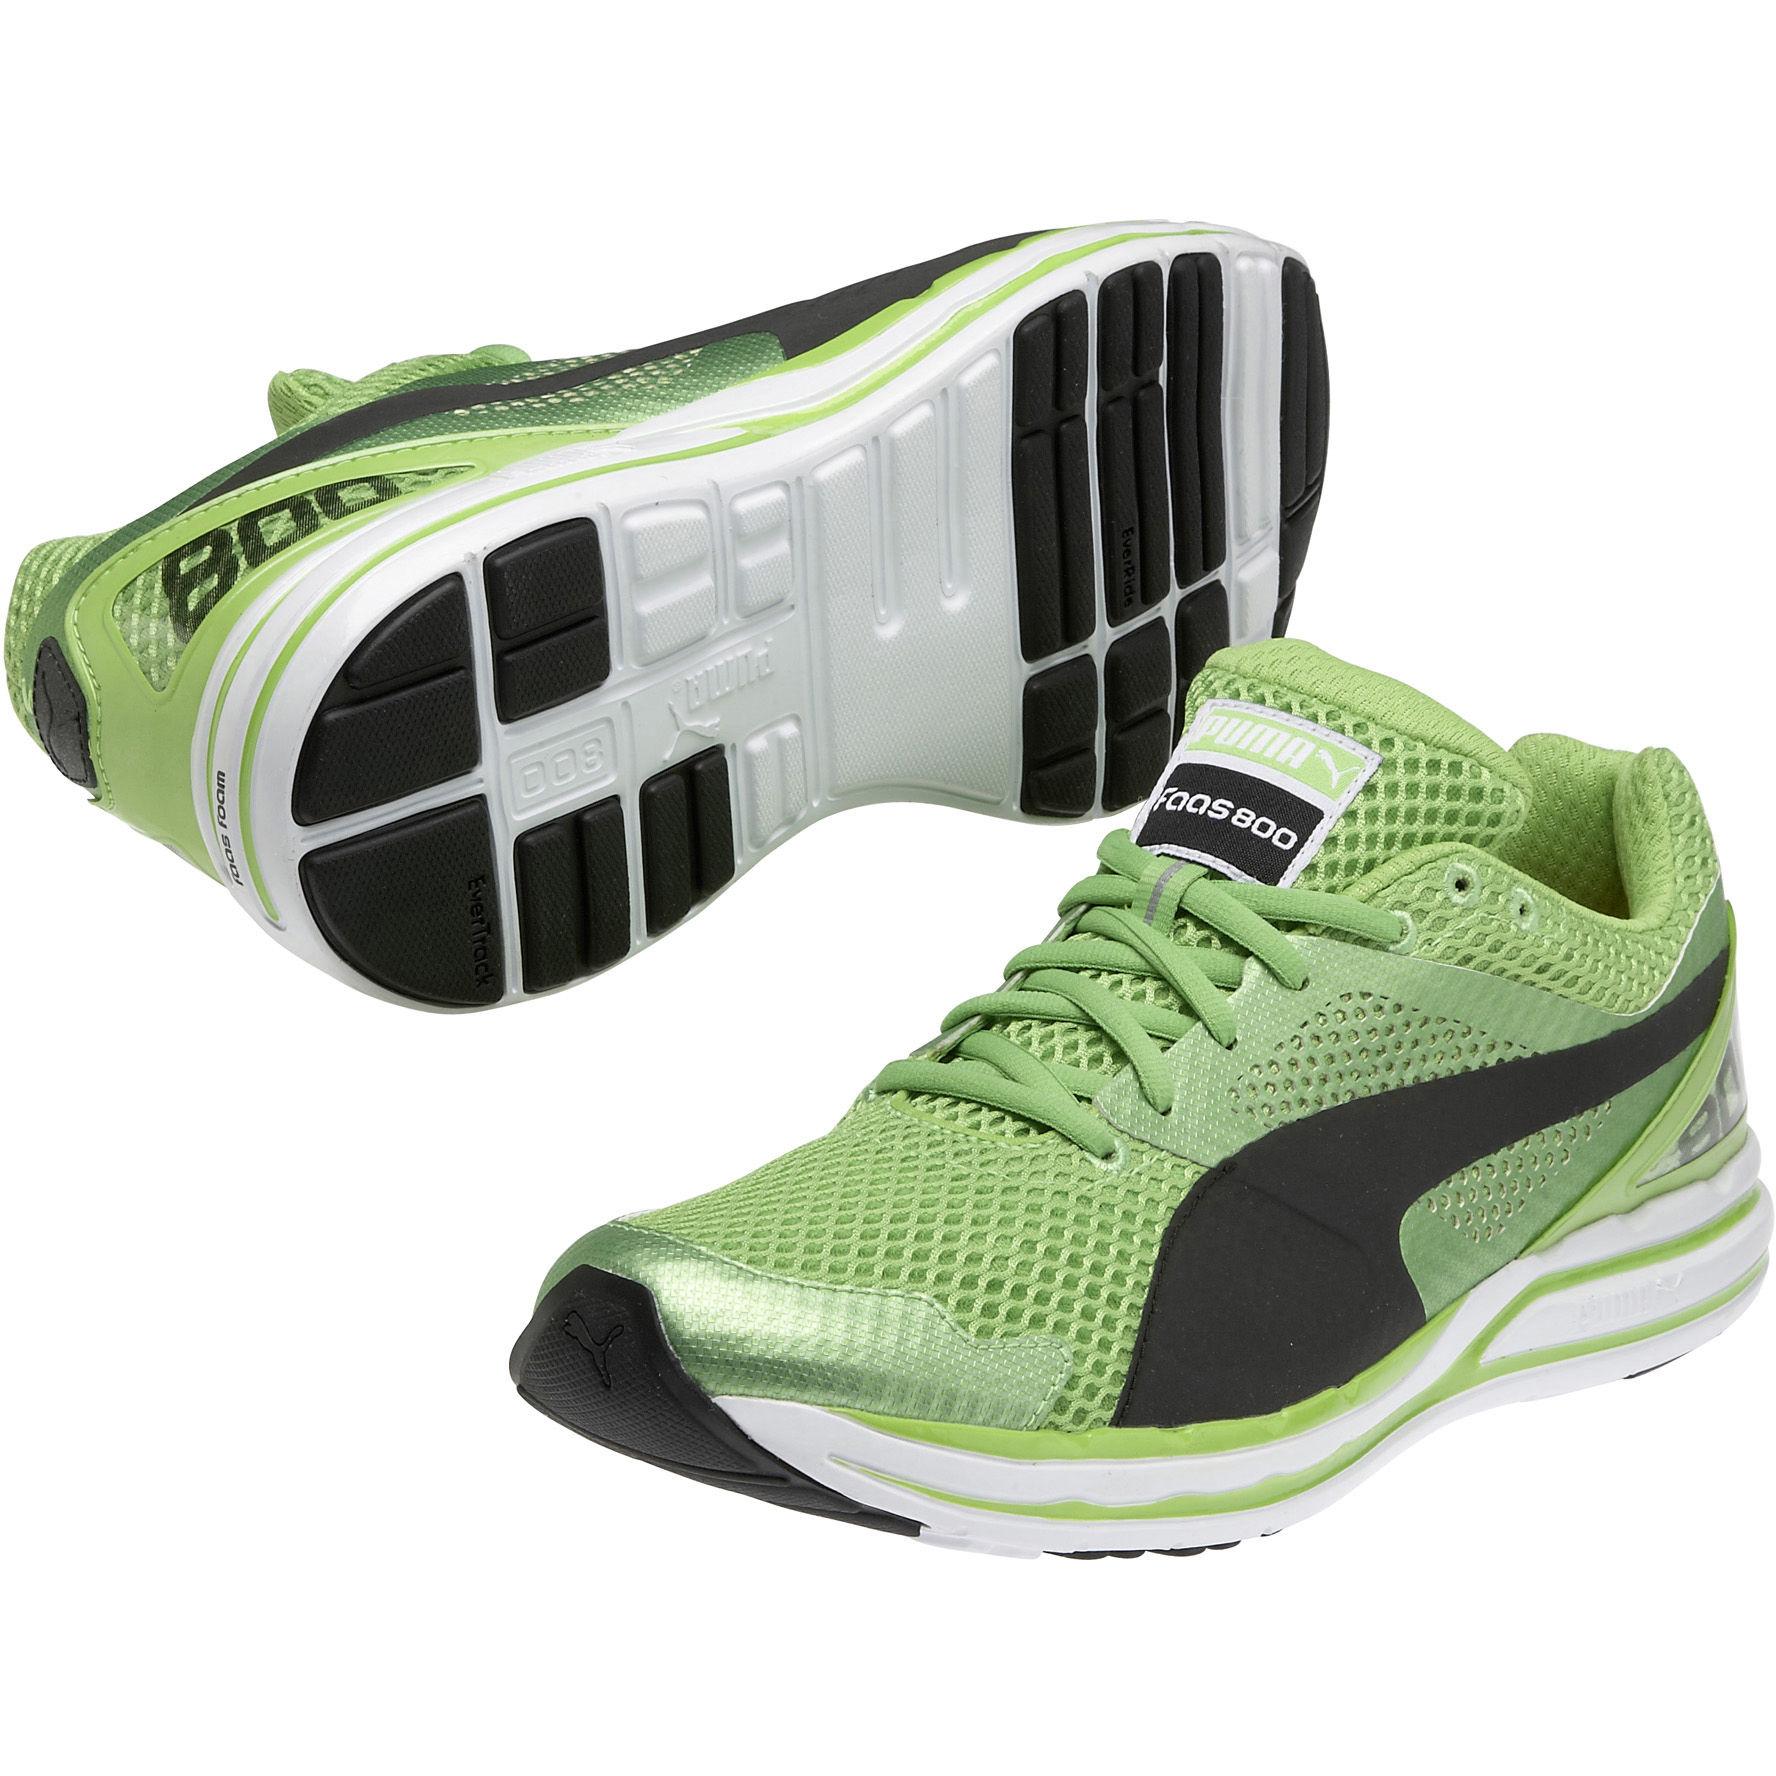 Foto Zapatillas de atletismo Puma - Faas 800 S - UK 7 Green/Black/White